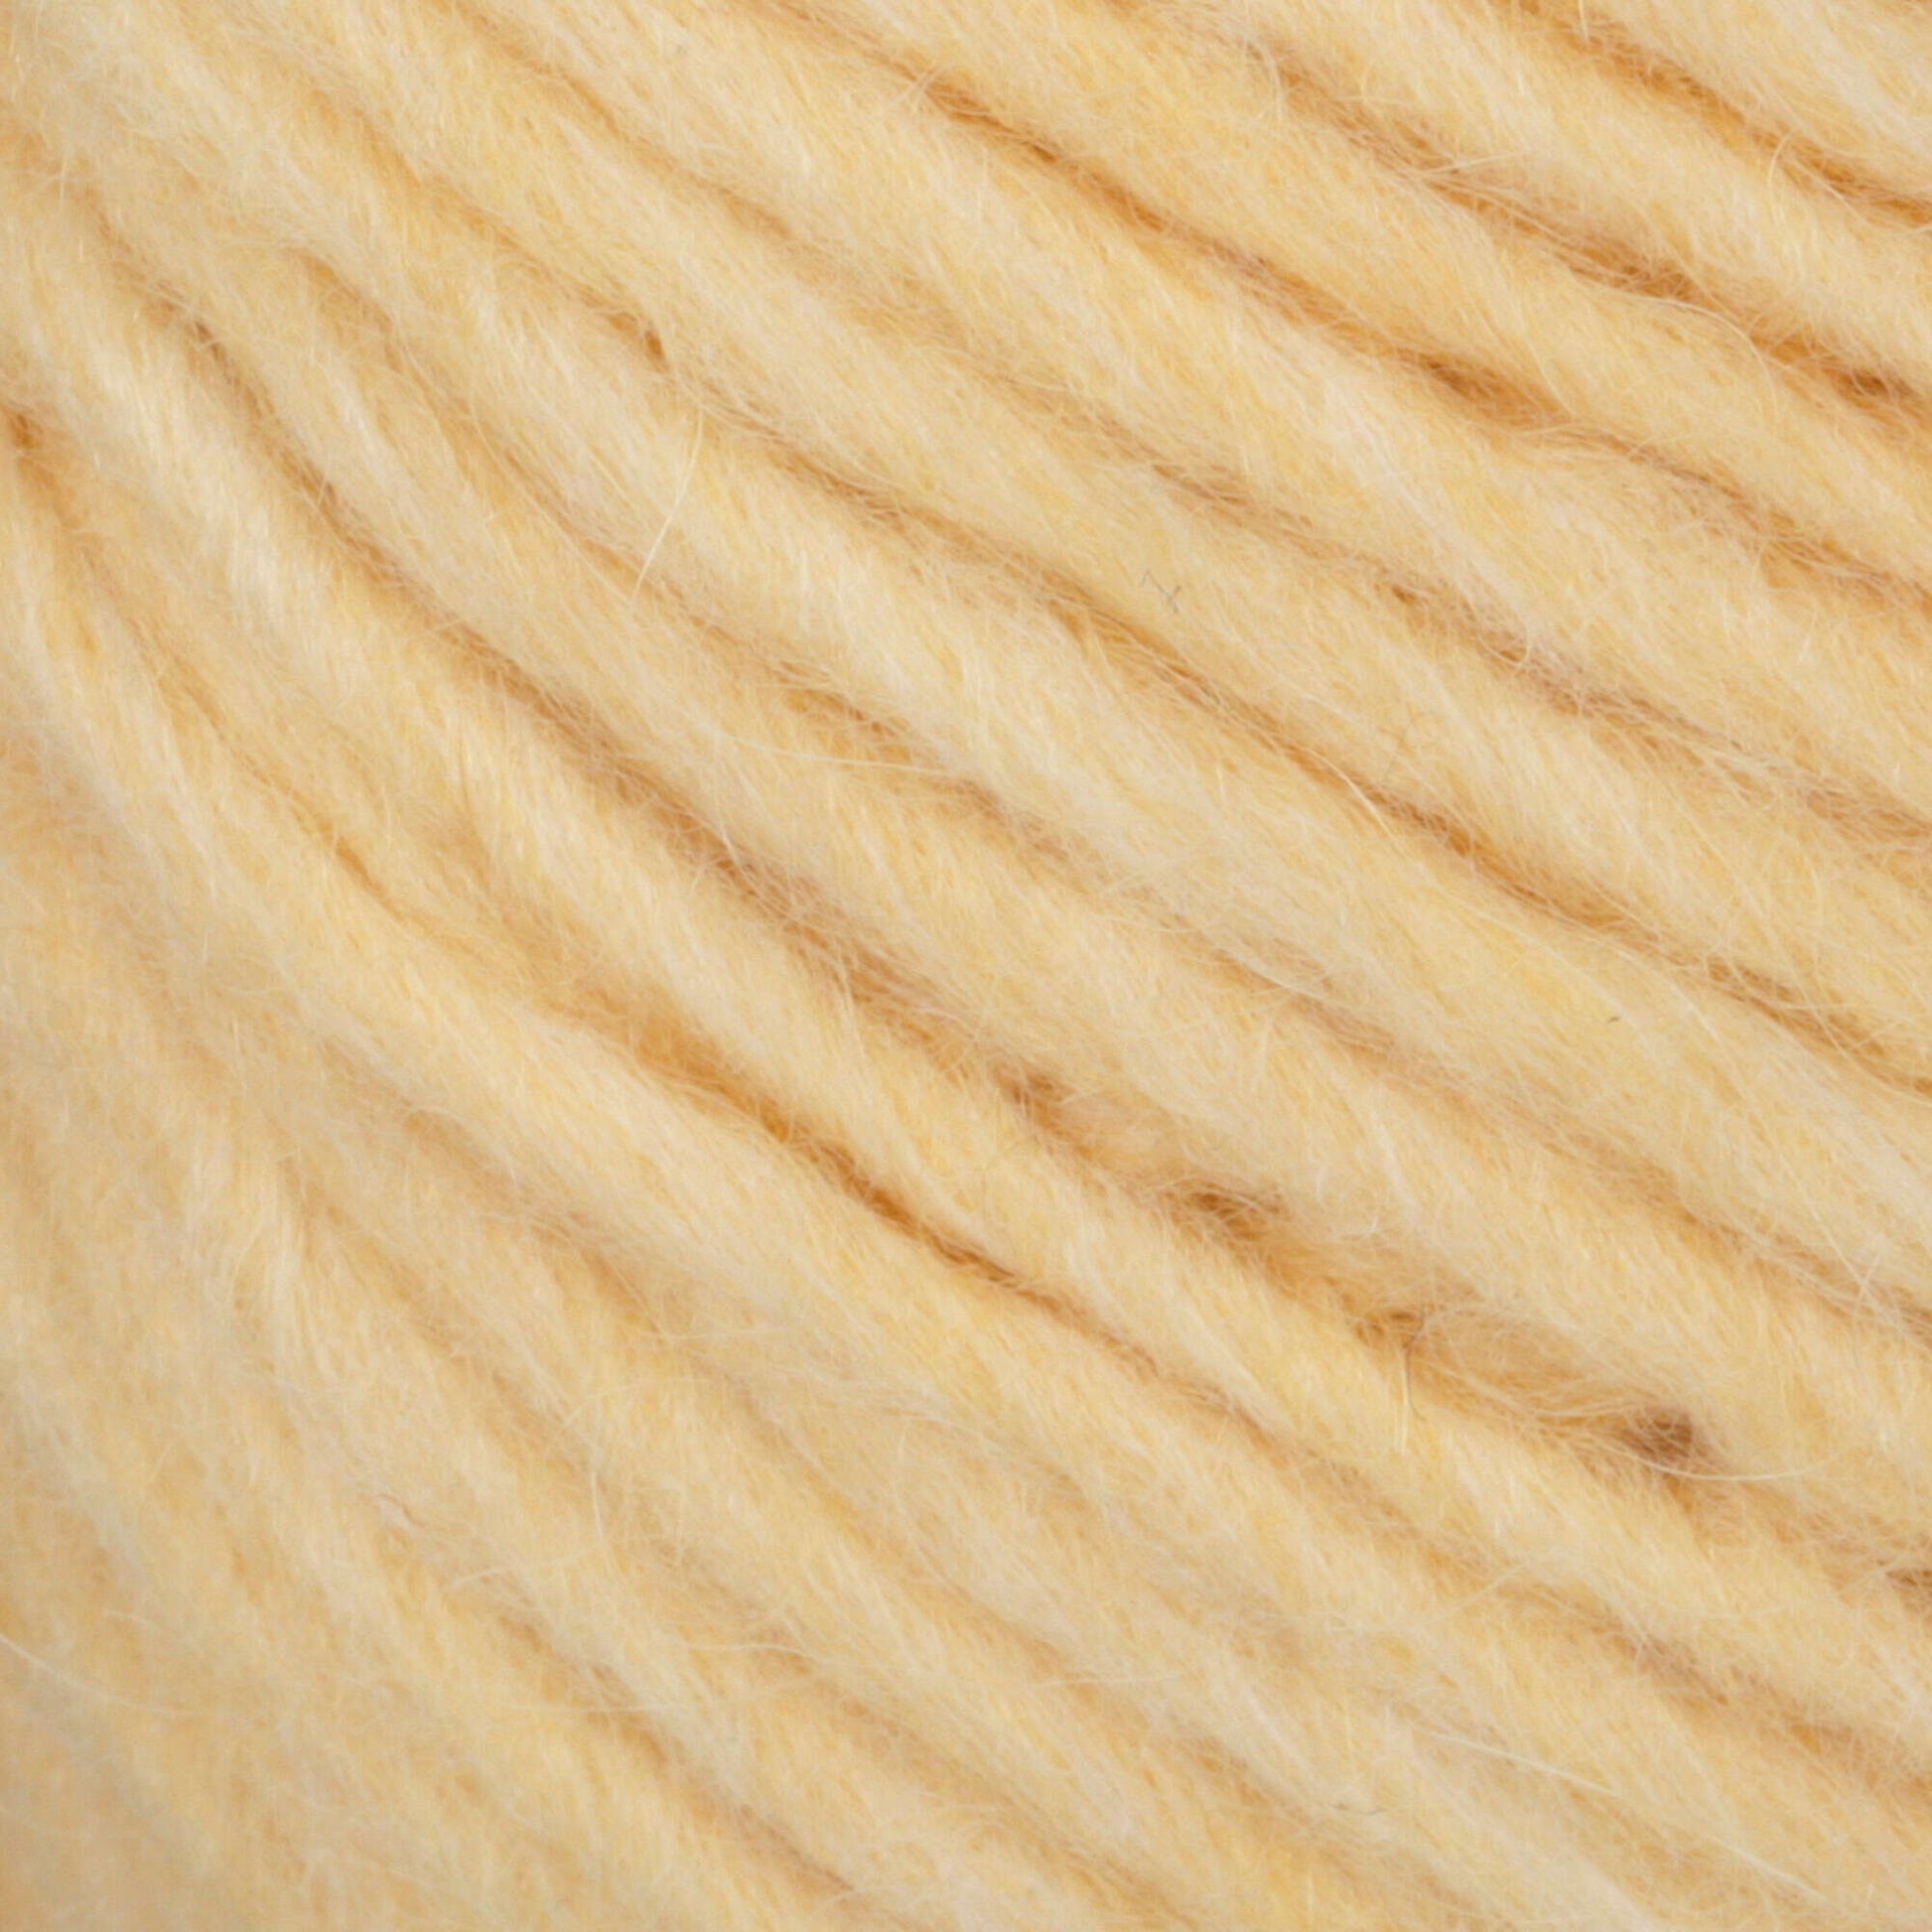 Patons Alpaca Blend Yarn - Discontinued Shades Maize